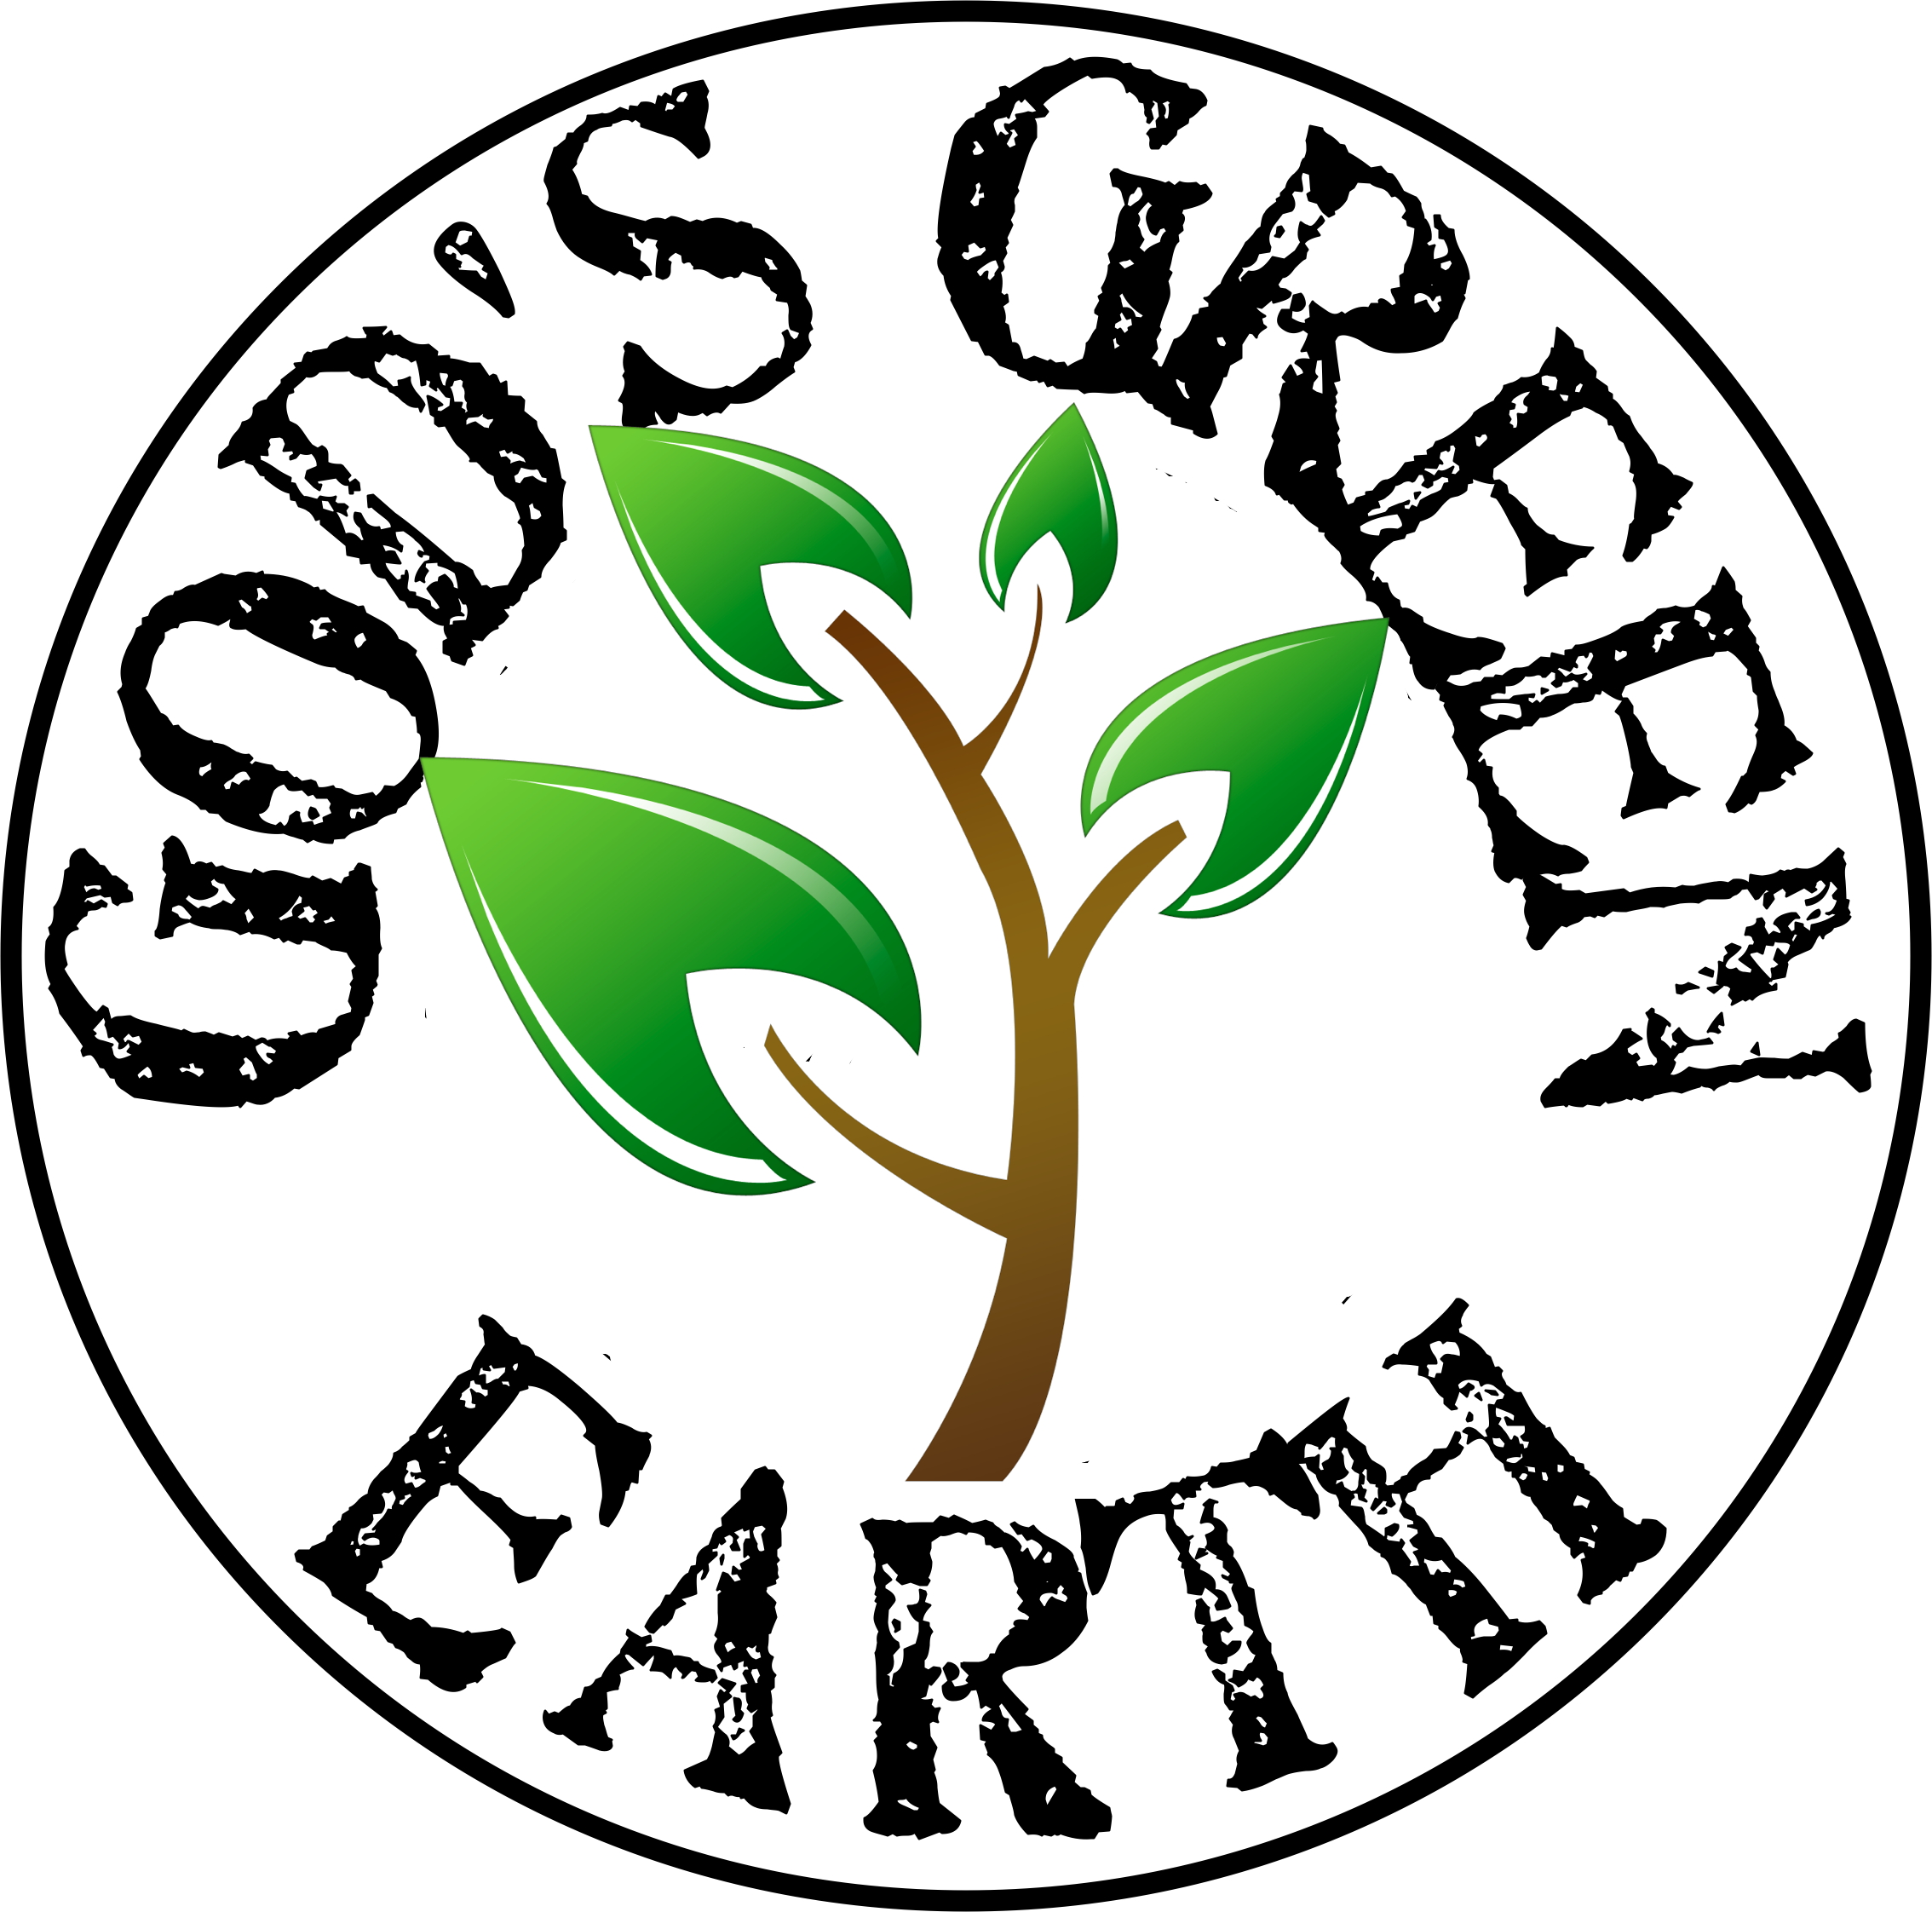 God's Green Earth Logo